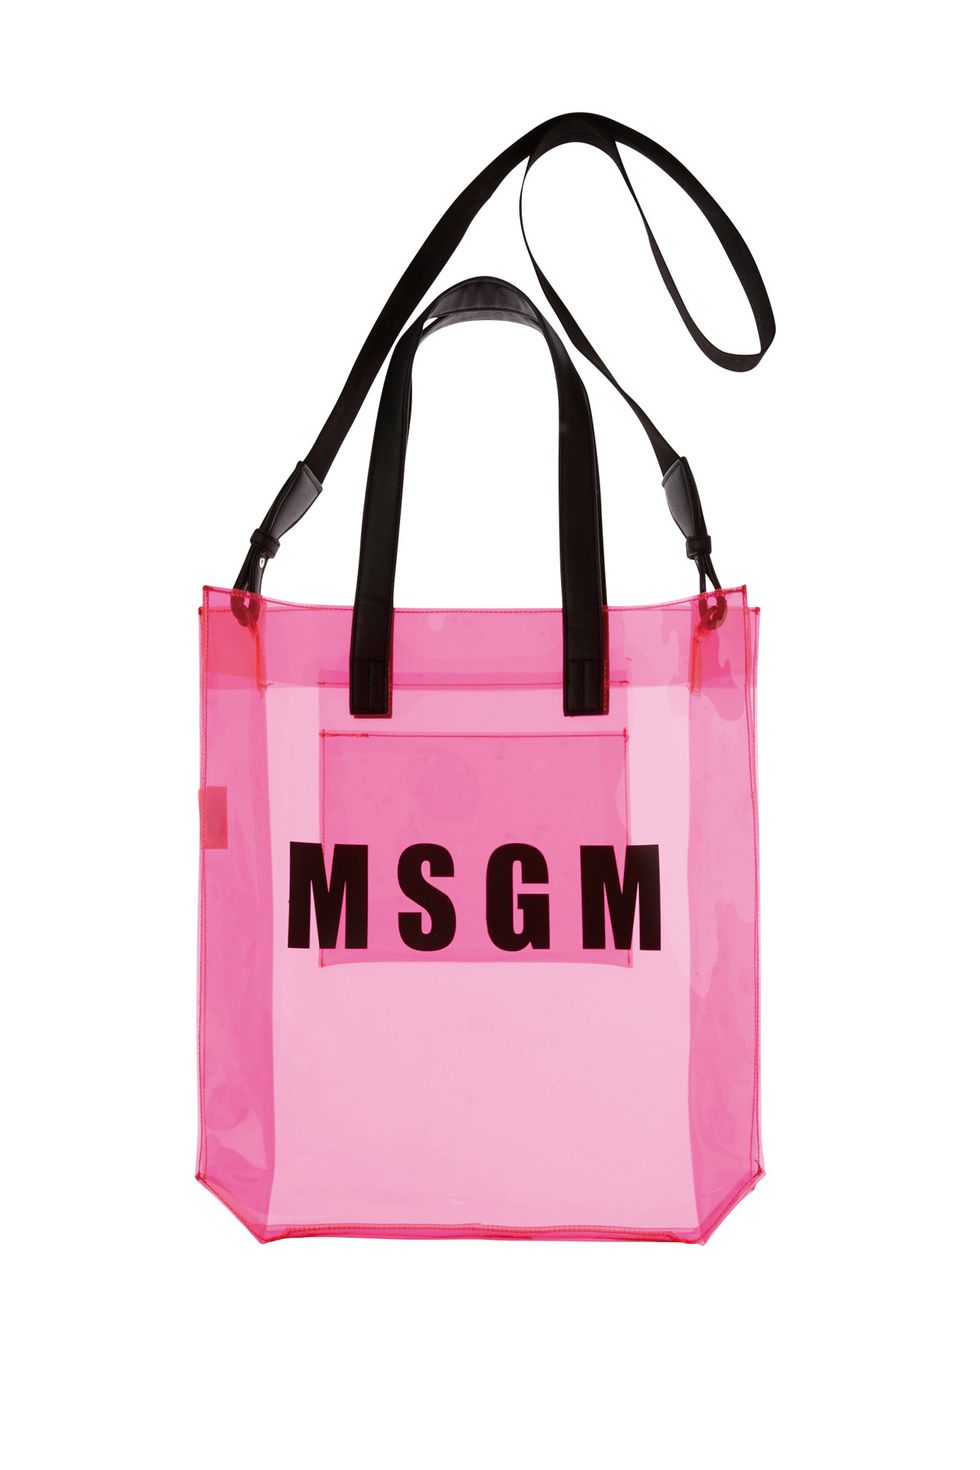 Handbag, Bag, Pink, Product, Tote bag, Fashion accessory, Font, Shopping bag, Luggage and bags, Material property, 